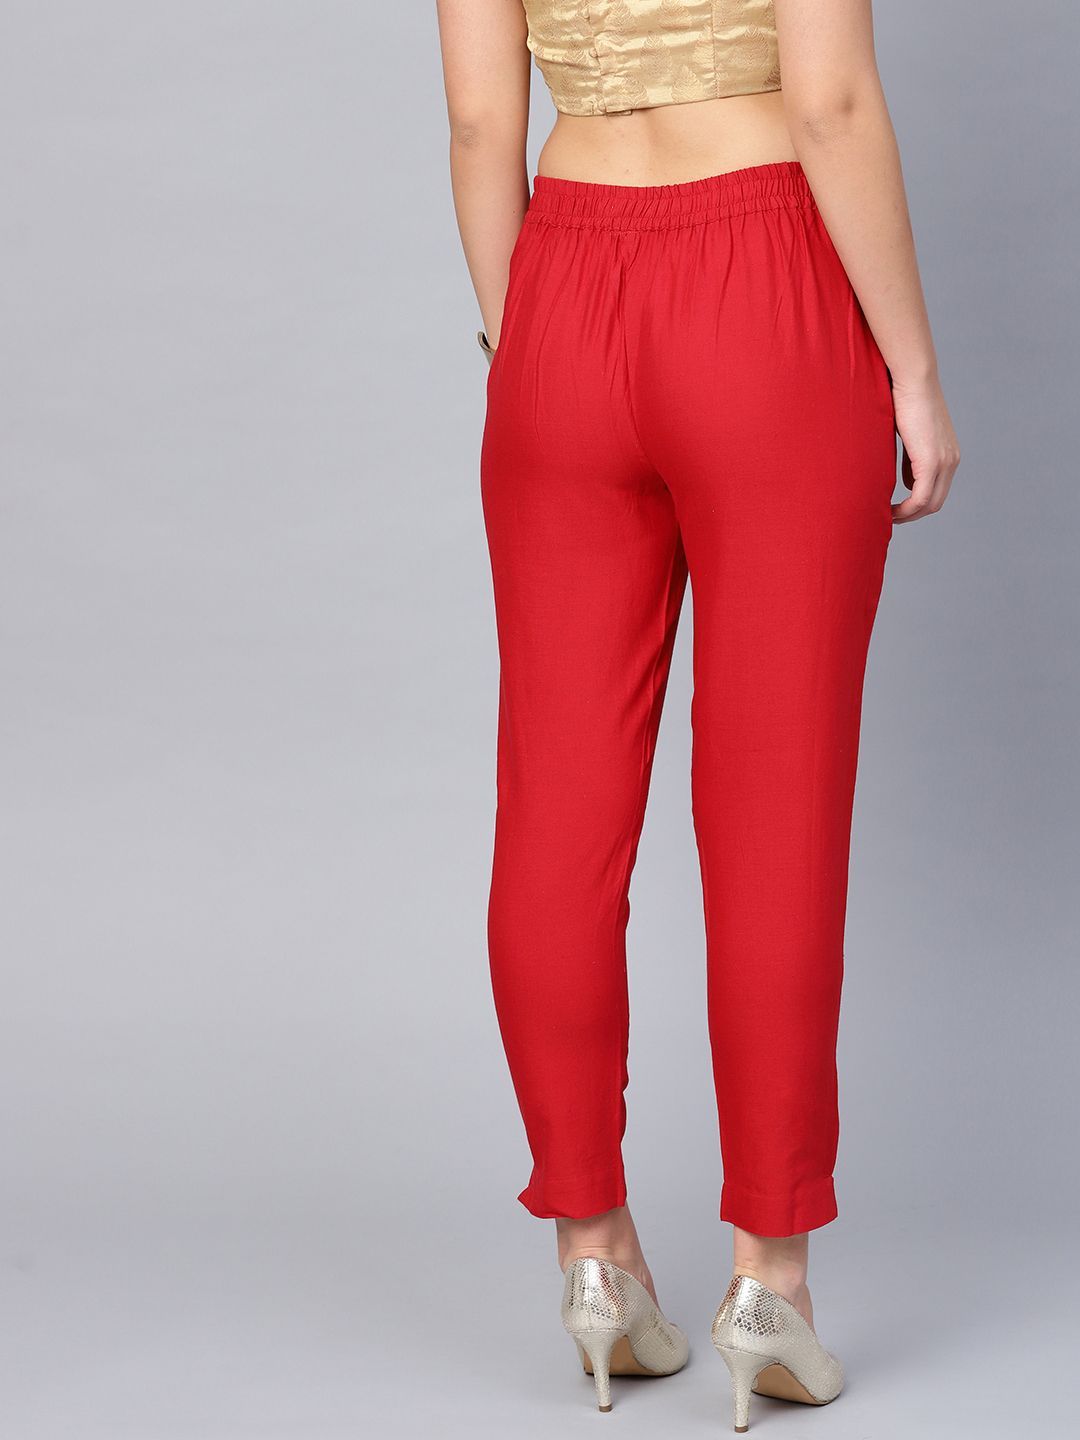 Women's Red Cotton Solid Cigarette Pants - Juniper